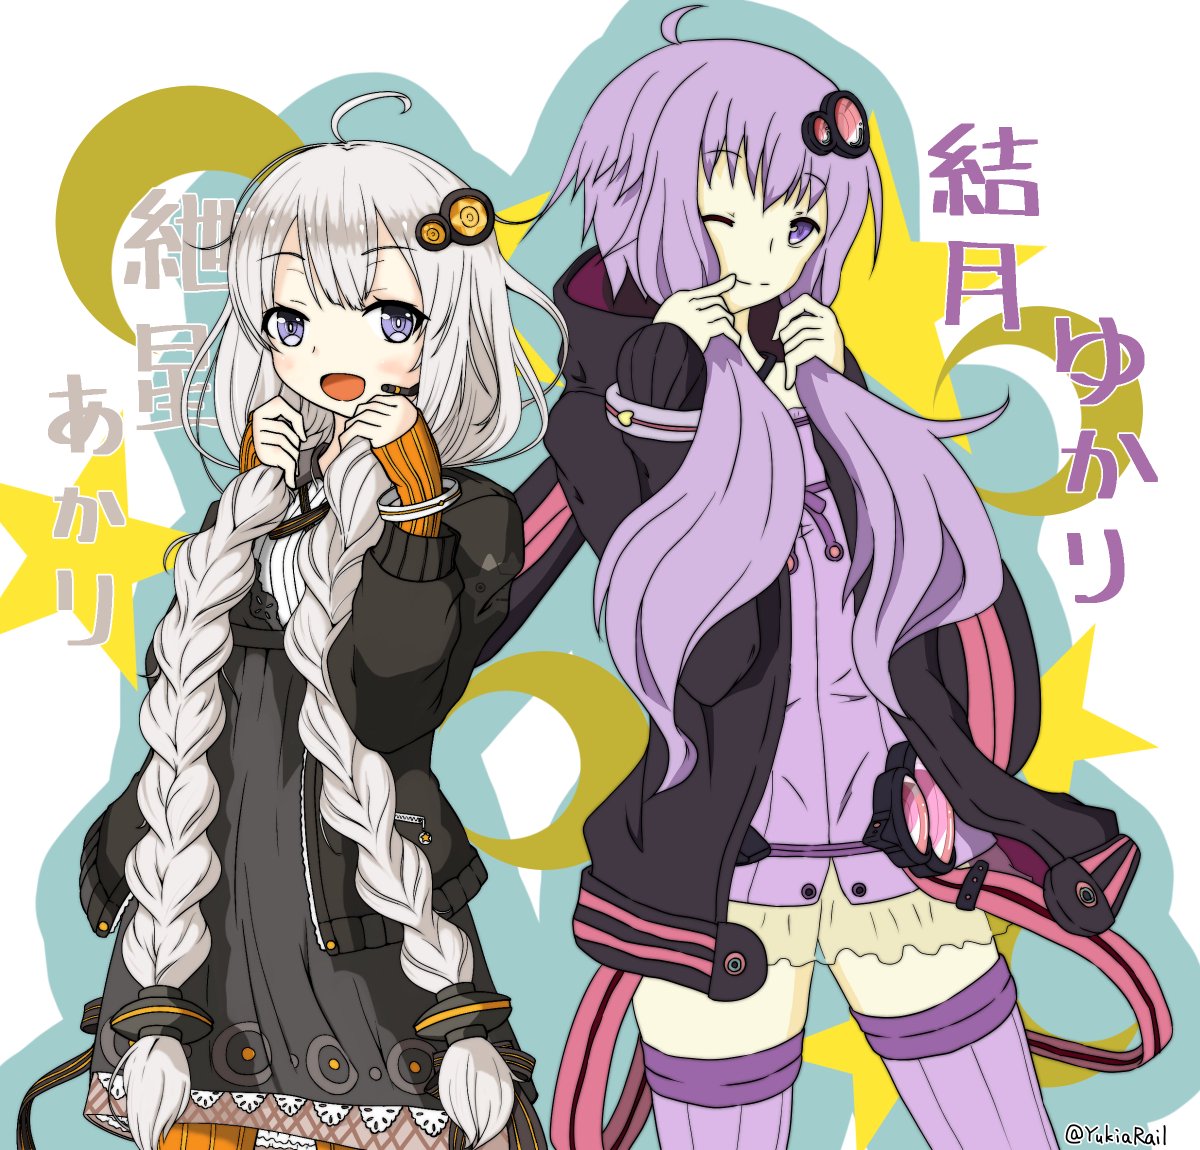 kizuna akari ,yuzuki yukari multiple girls 2girls hair ornament dress braid purple hair one eye closed  illustration images